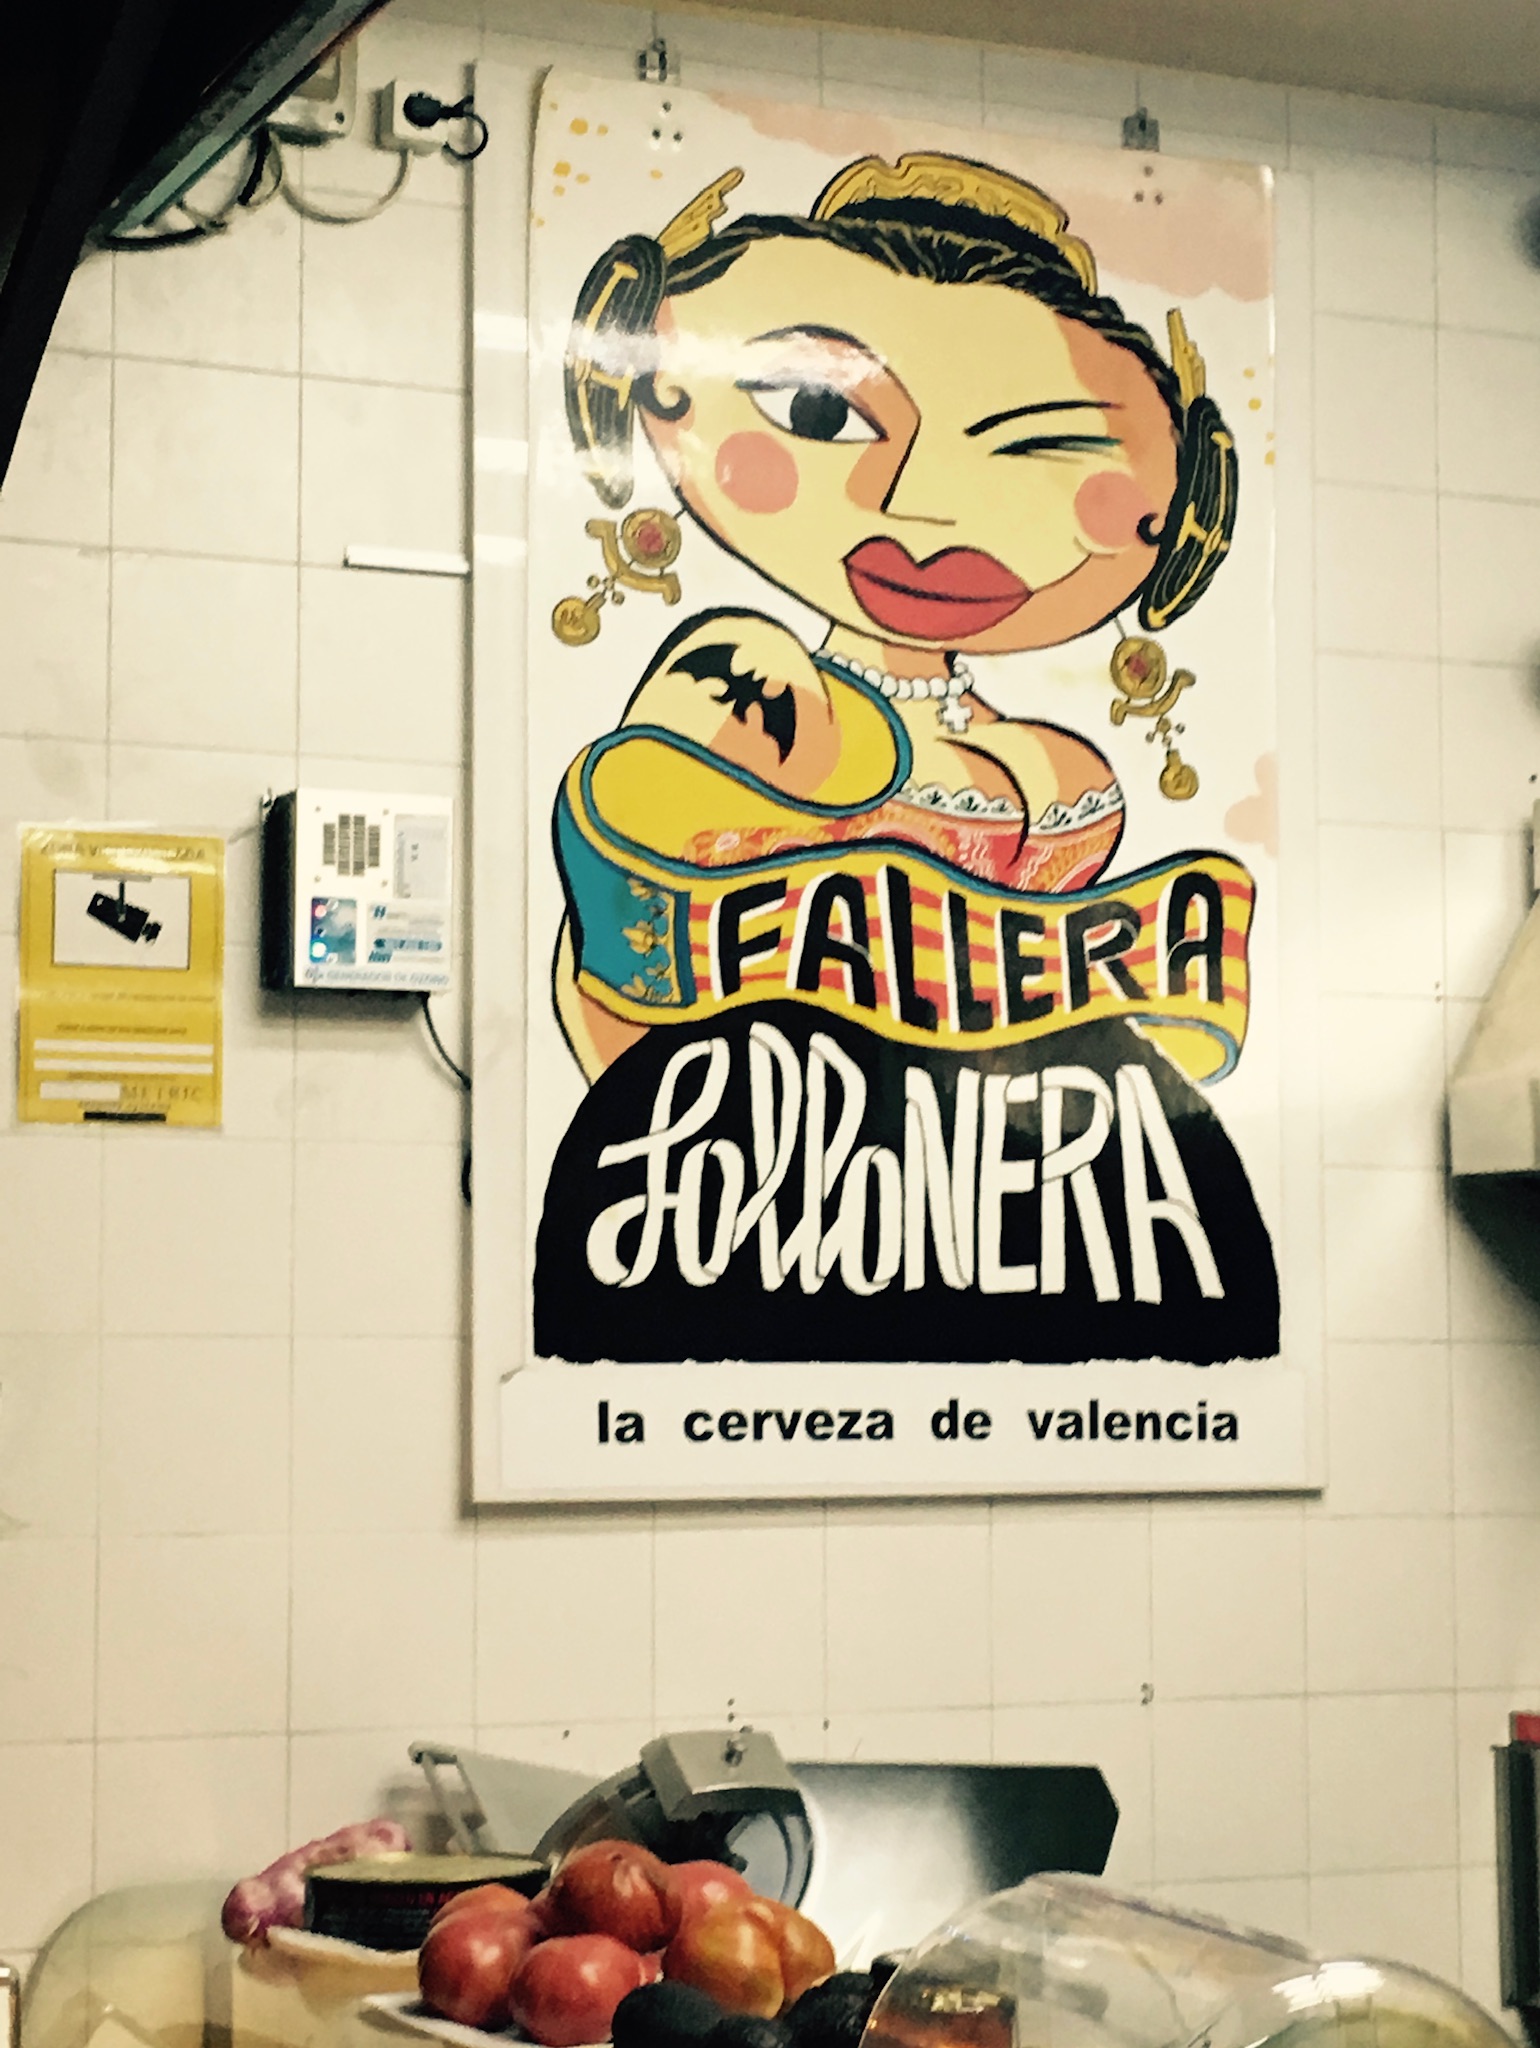 Food store poster of Spanish woman winking Follonera Fallera